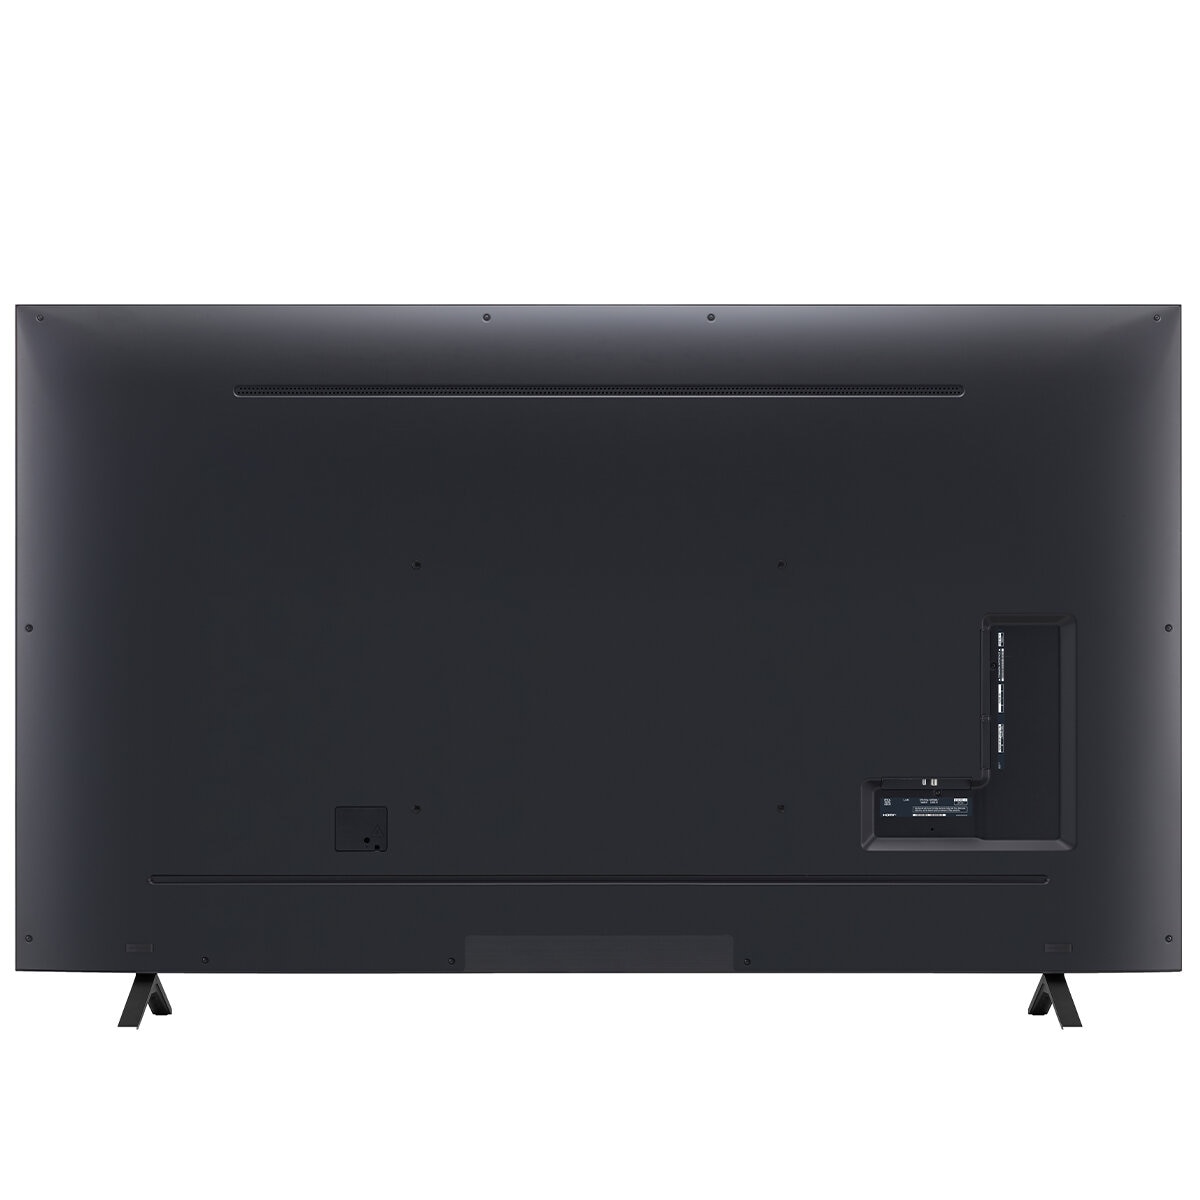 LG UR80 86 inch 4K Smart UHD TV with Al Sound Pro 86UR8050PSB